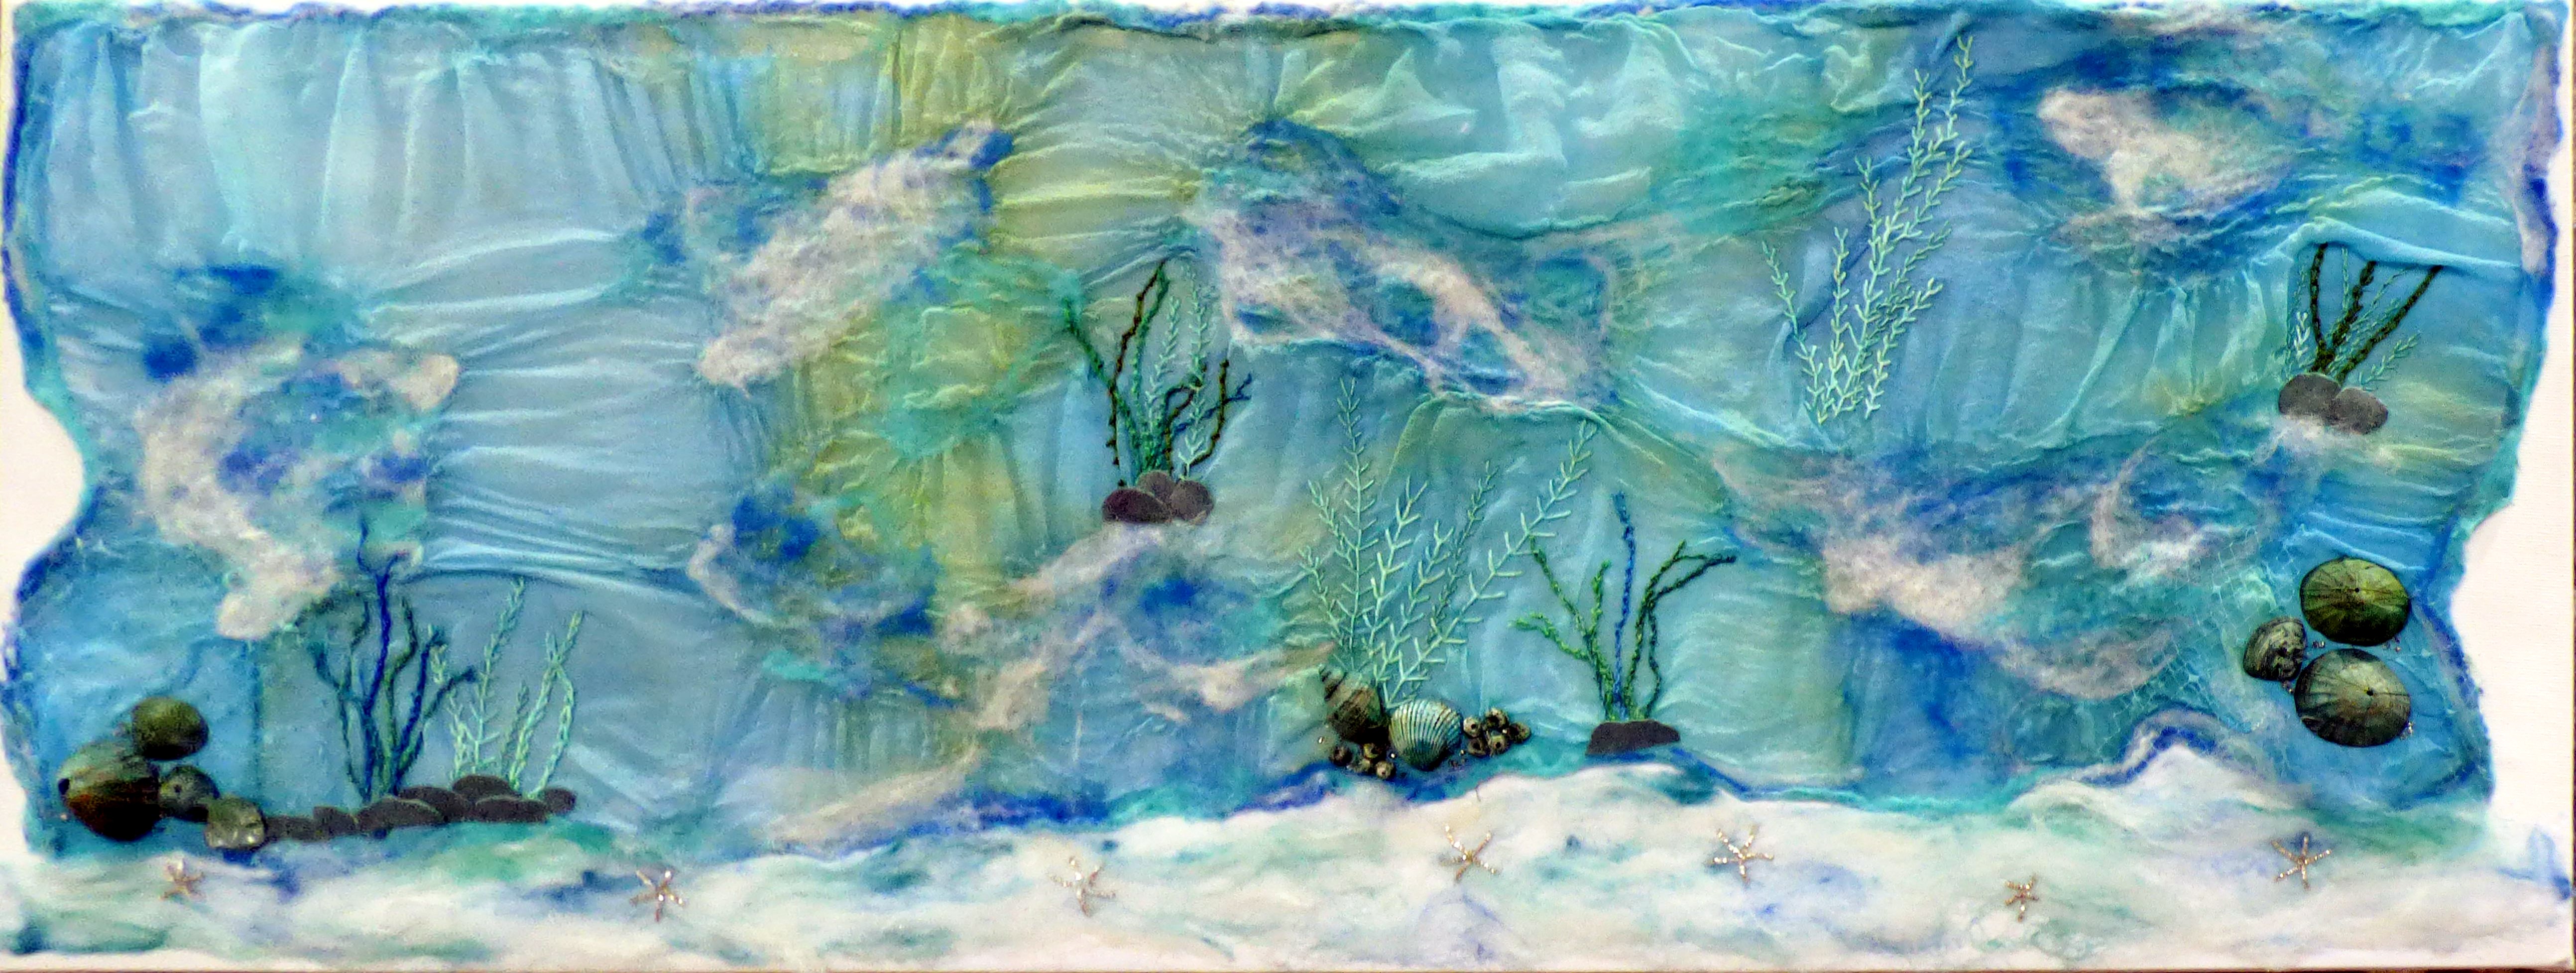 SEASCAPE by Beryl Trimby, N.Wales EG, felt and stitch on canvas